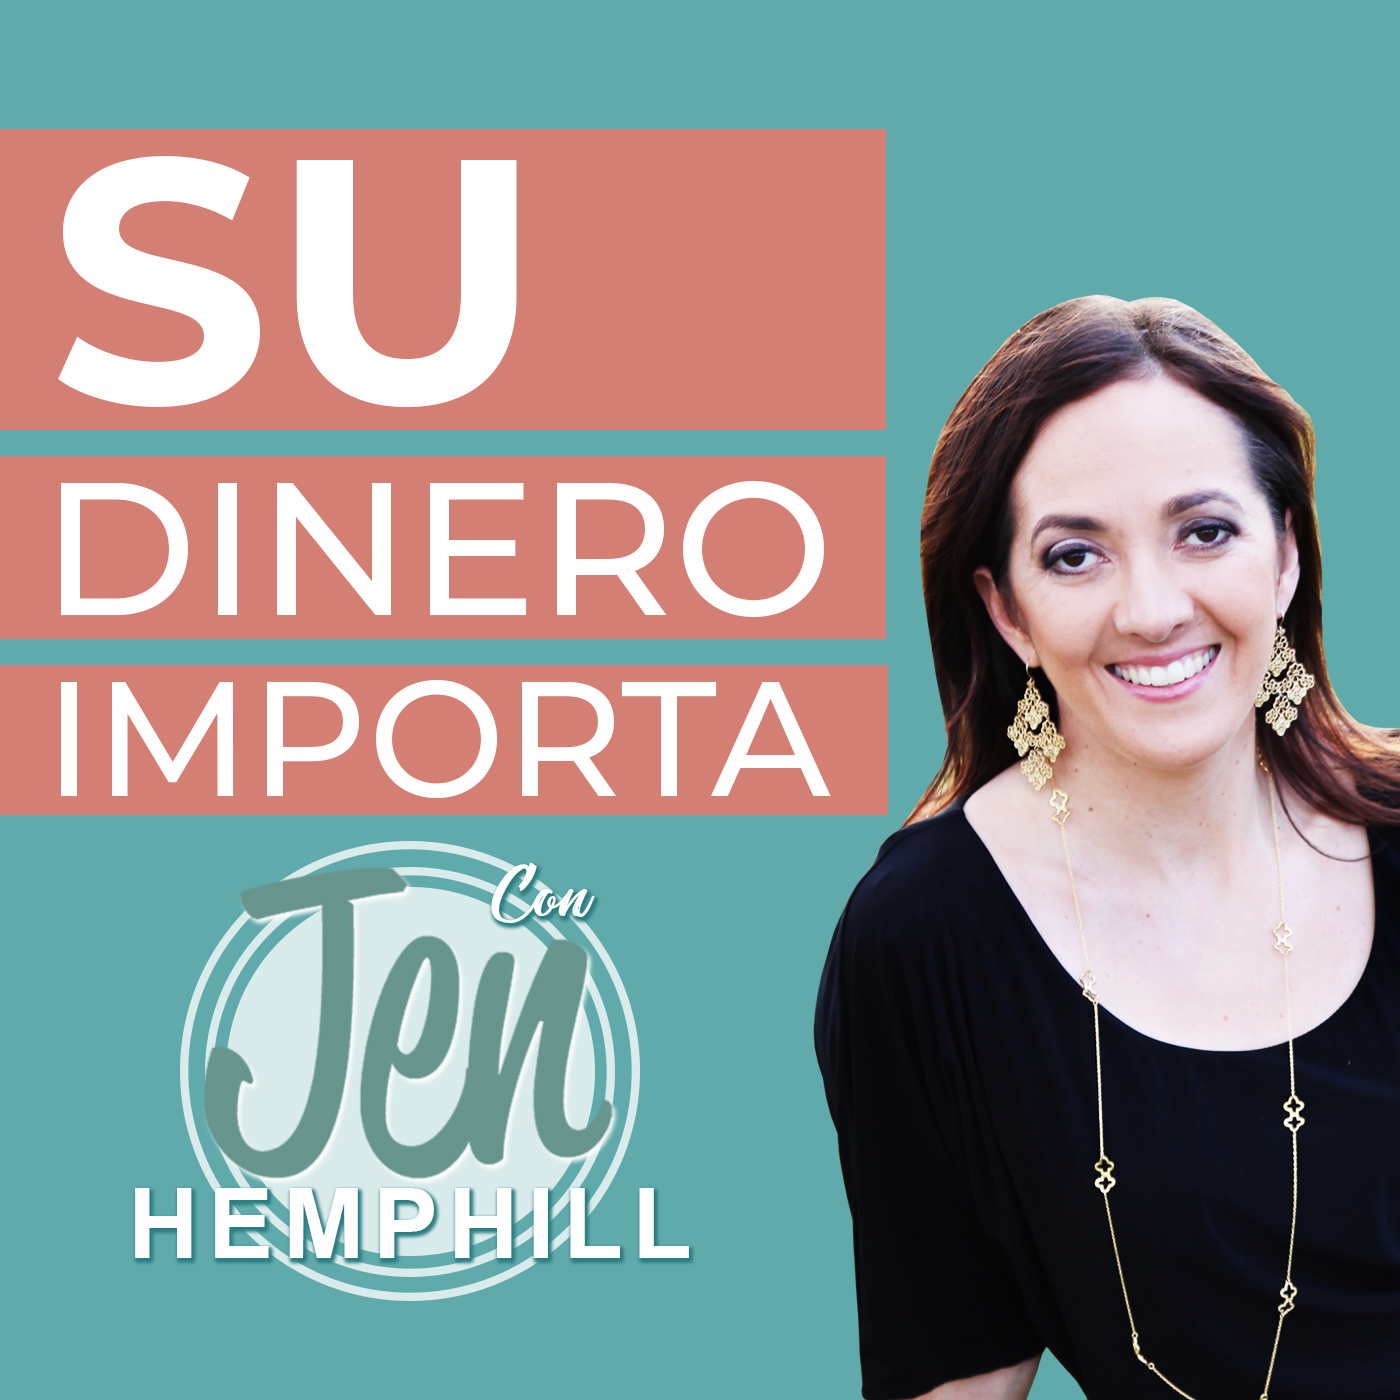 Introducing a New Sister Podcast, Su Dinero Importa